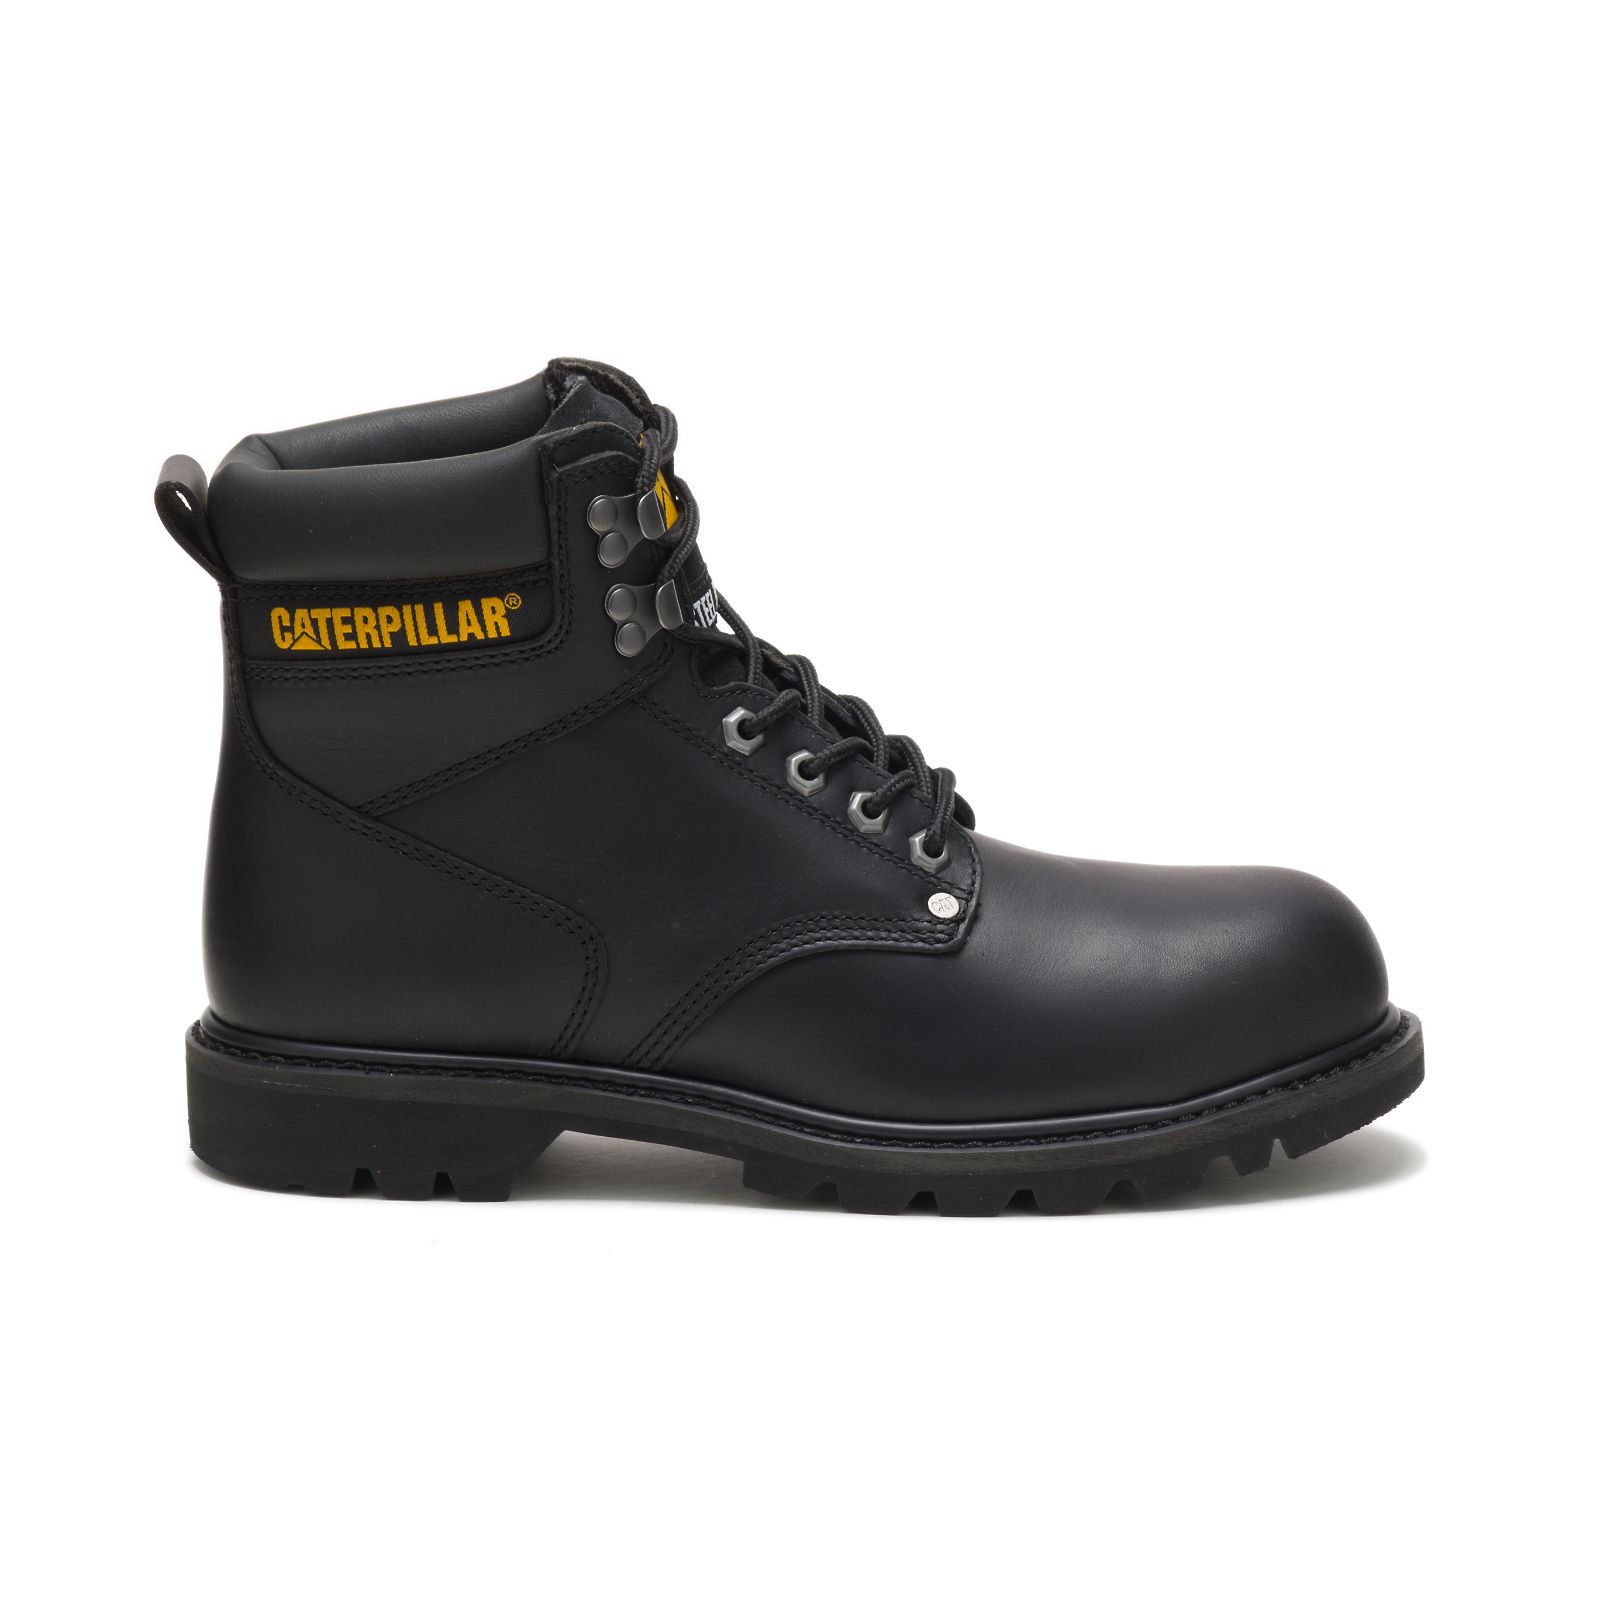 Caterpillar Work Boots Online UAE - Caterpillar Second Shift Steel Toe Mens - Black RXKEVY490